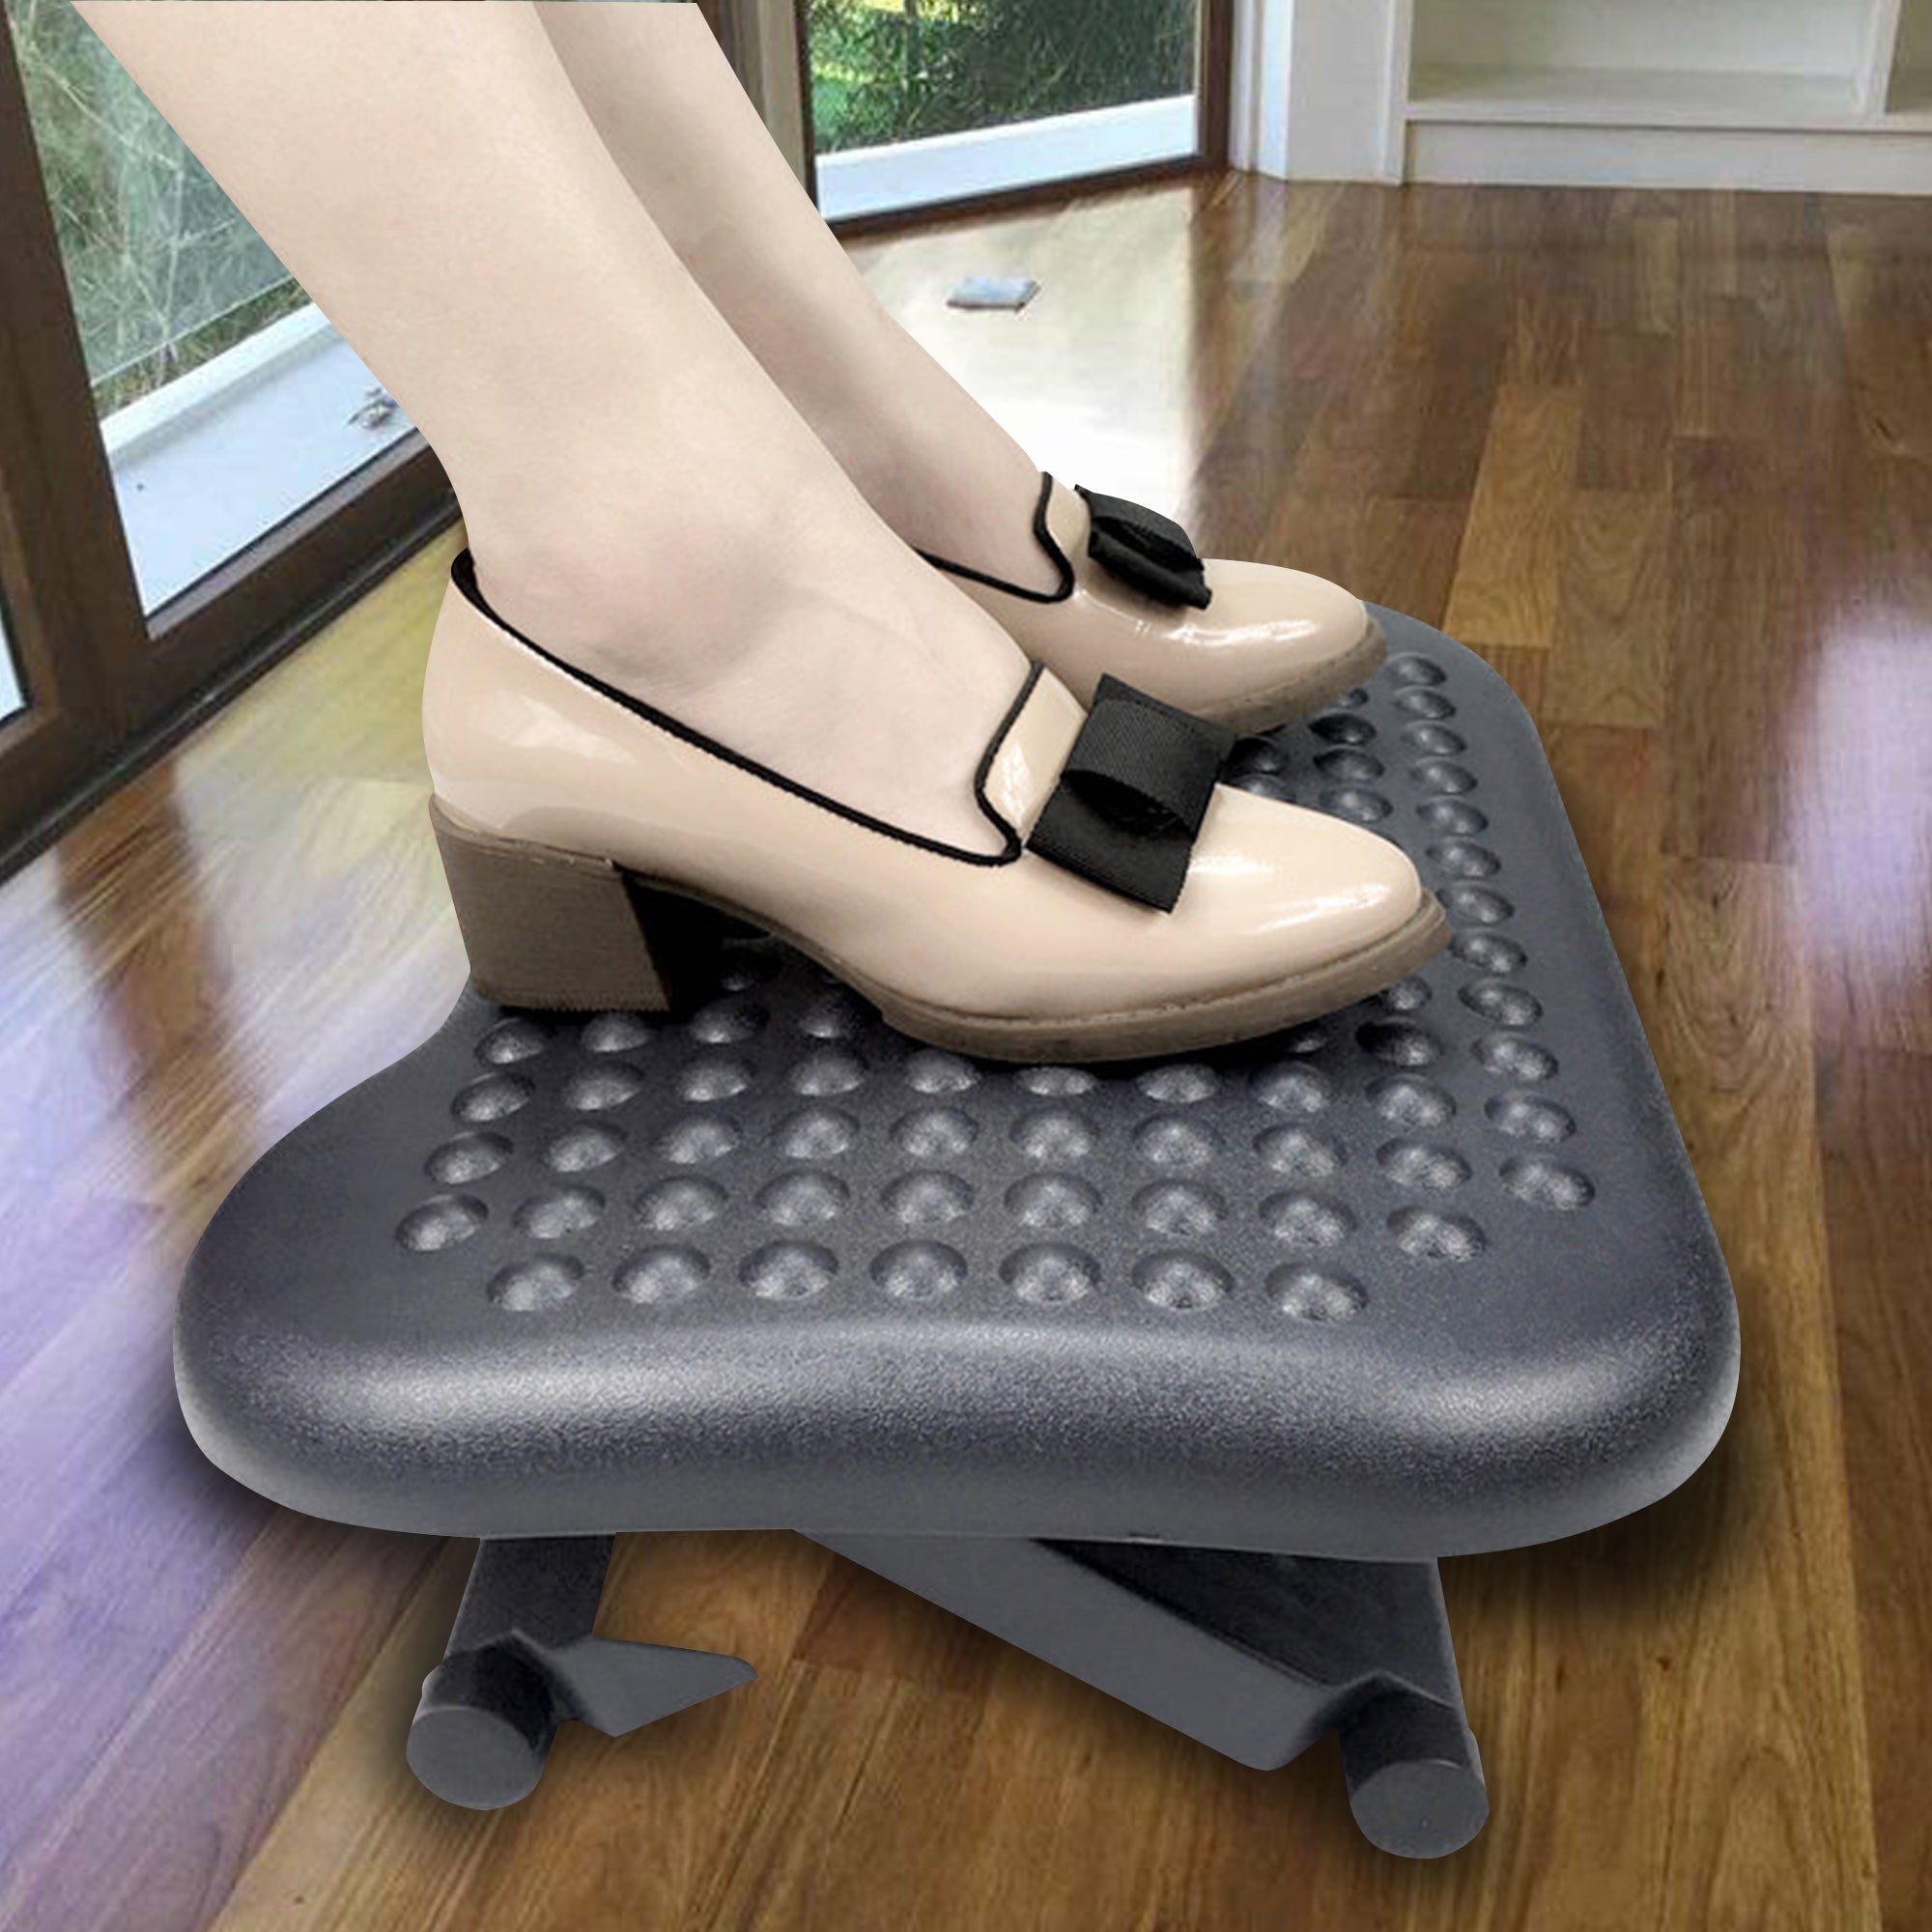 ergonomic foot rest under desk amazon